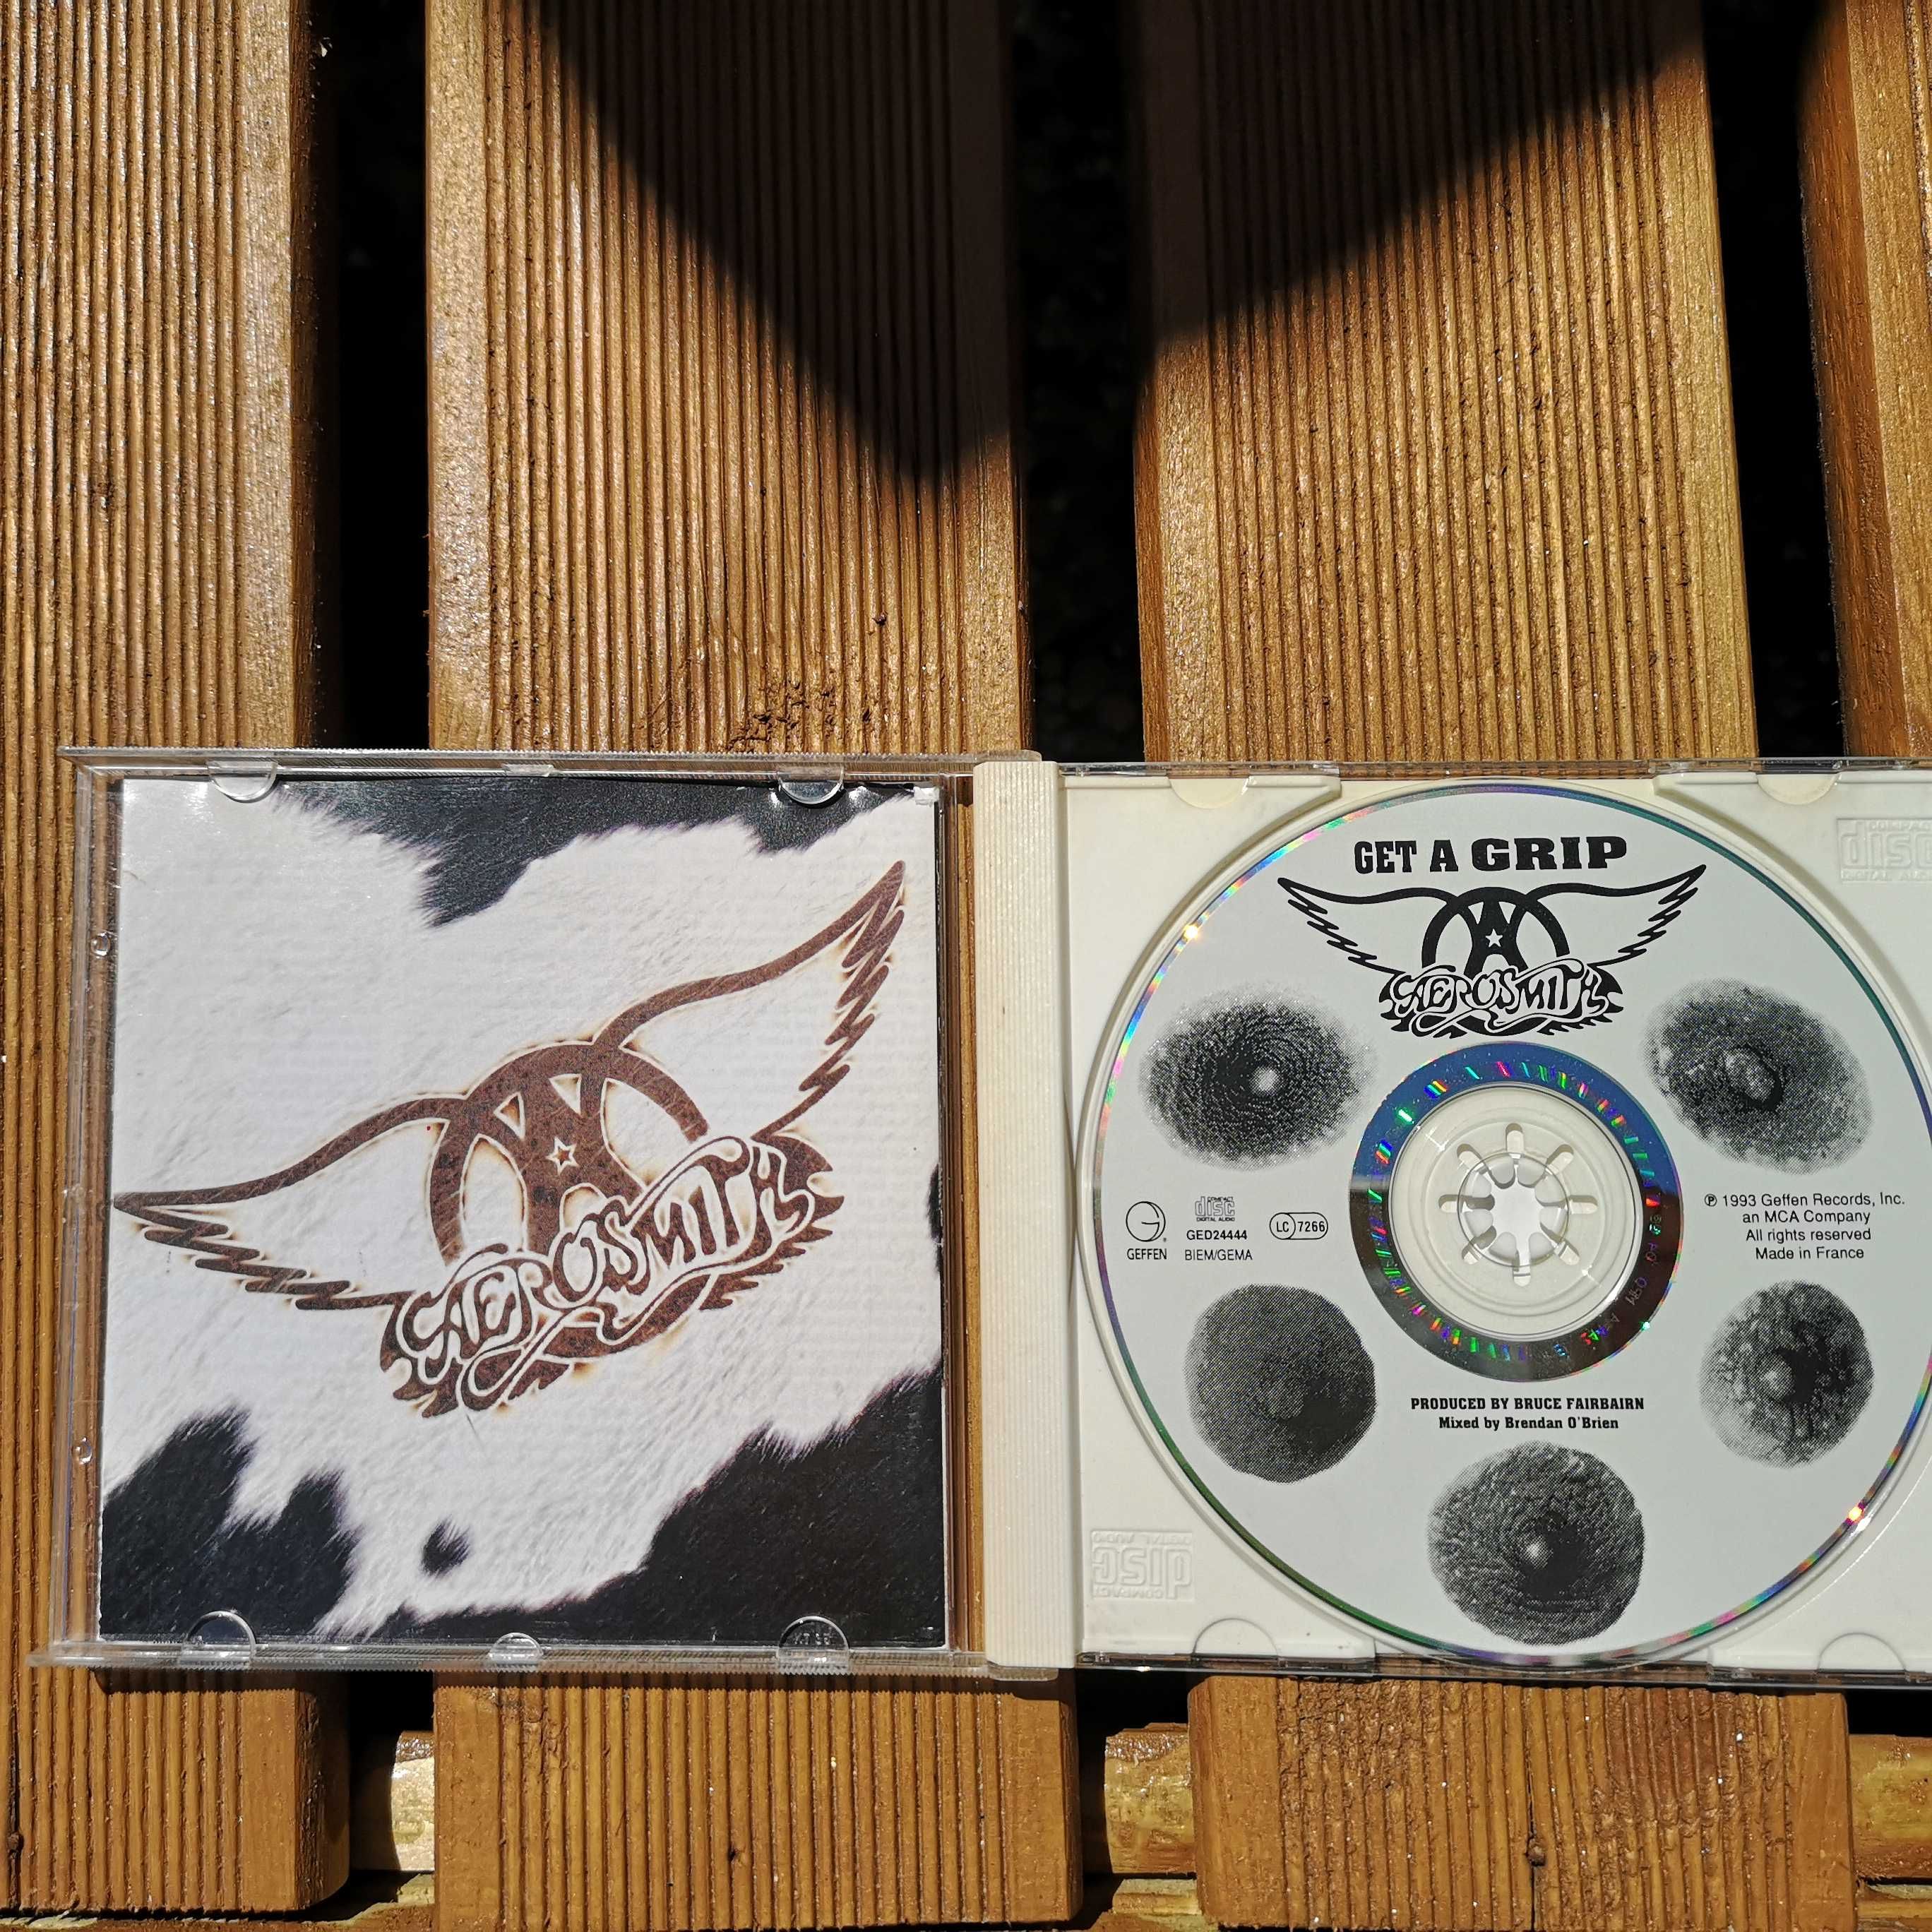 CD Aerosmith - Get a grip